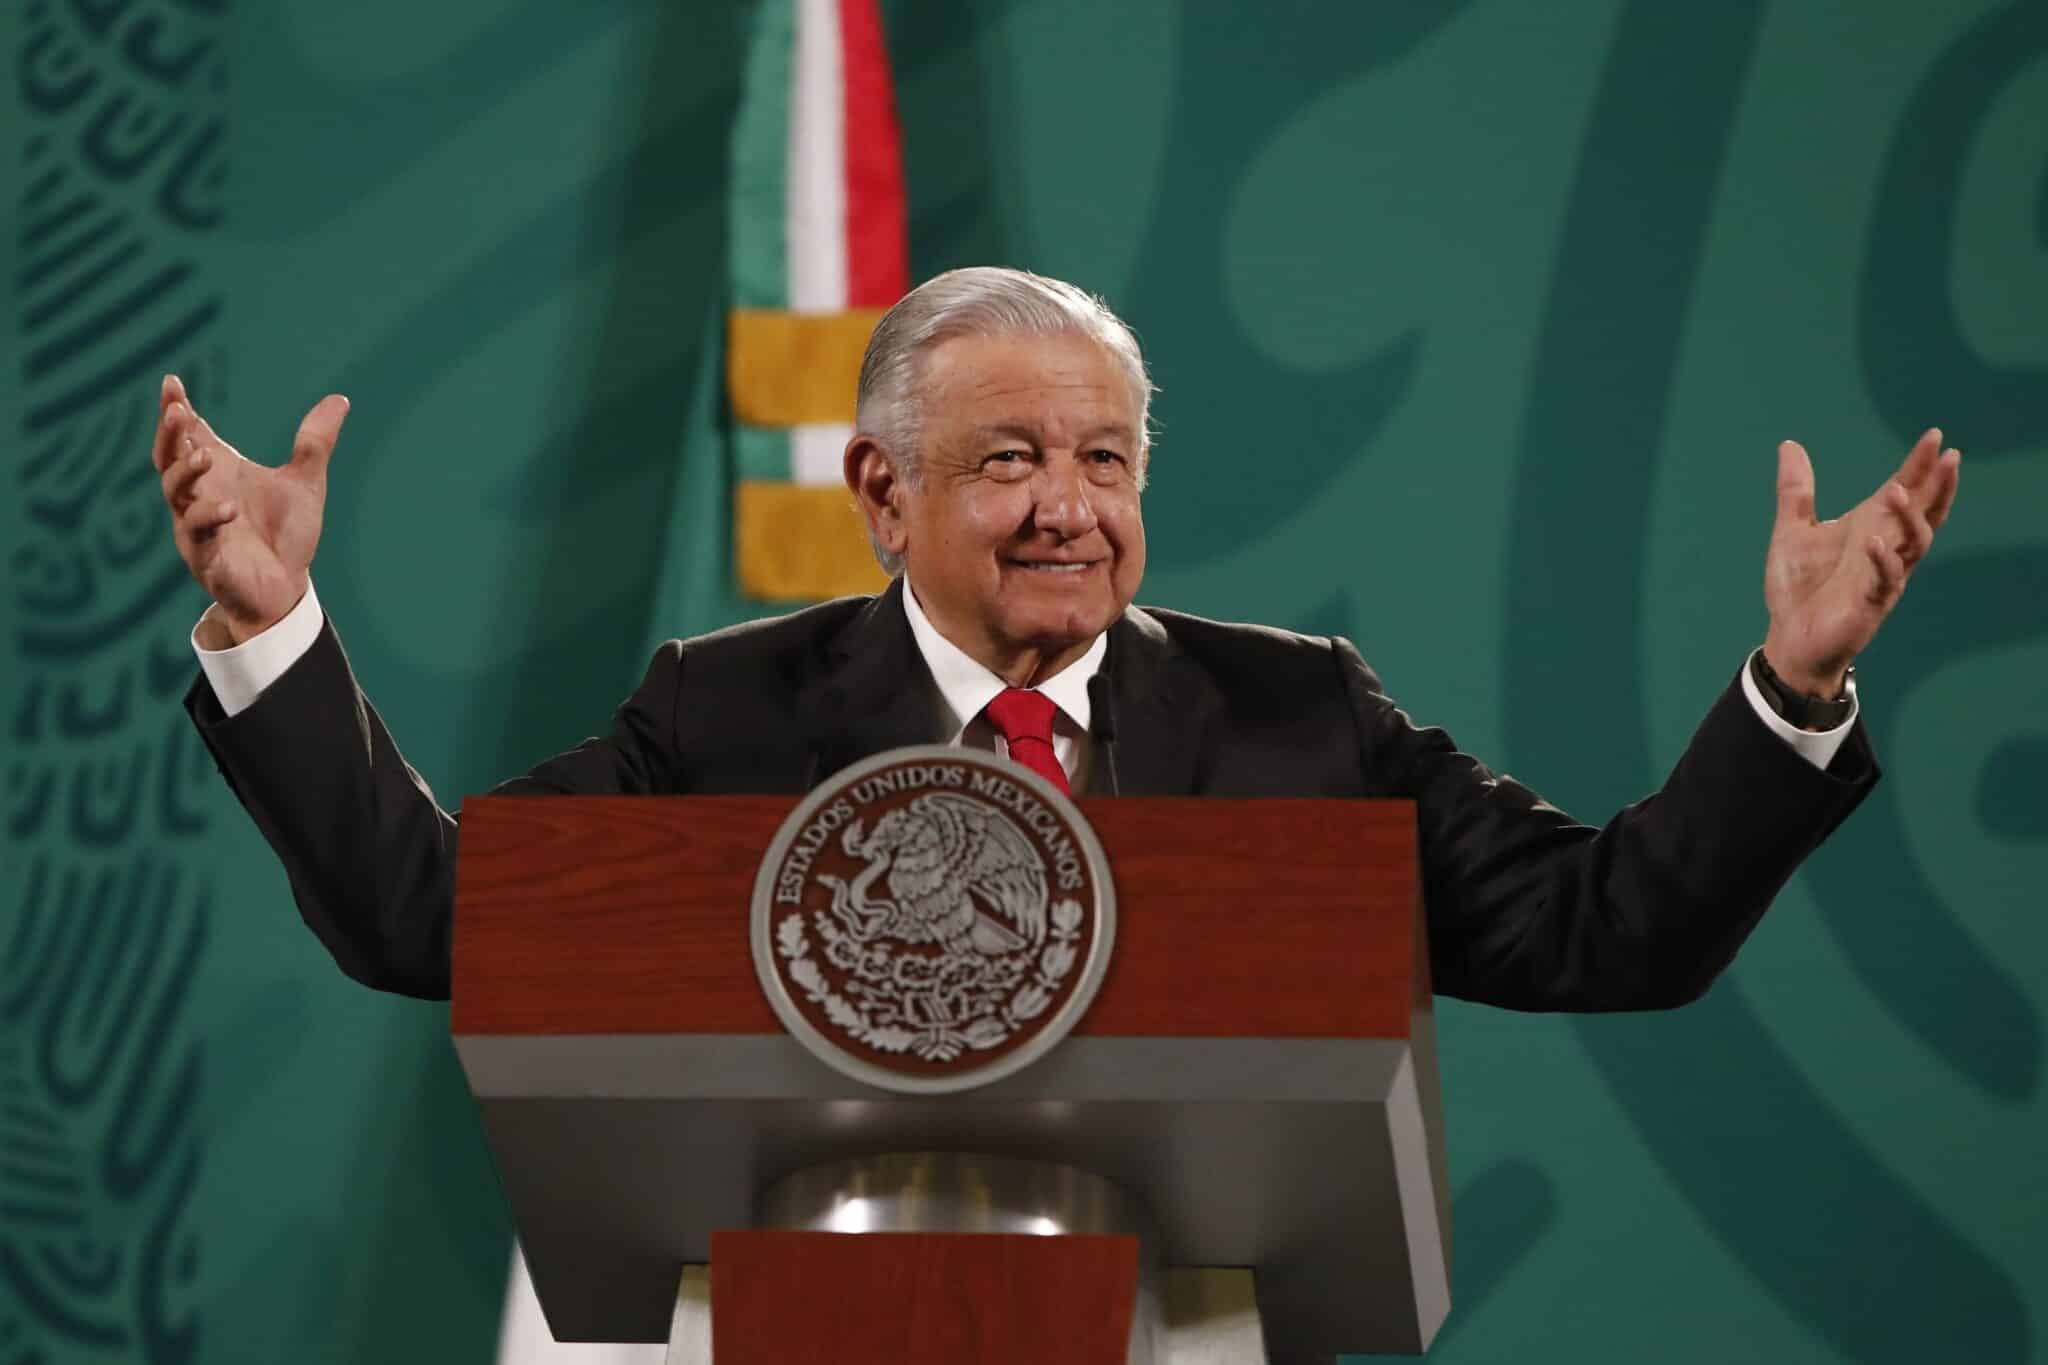 El presidente de México, Andrés Manuel López Obrador, ha vuelto a crear polémica criticando que España llevara la viruela a América durante la conquista